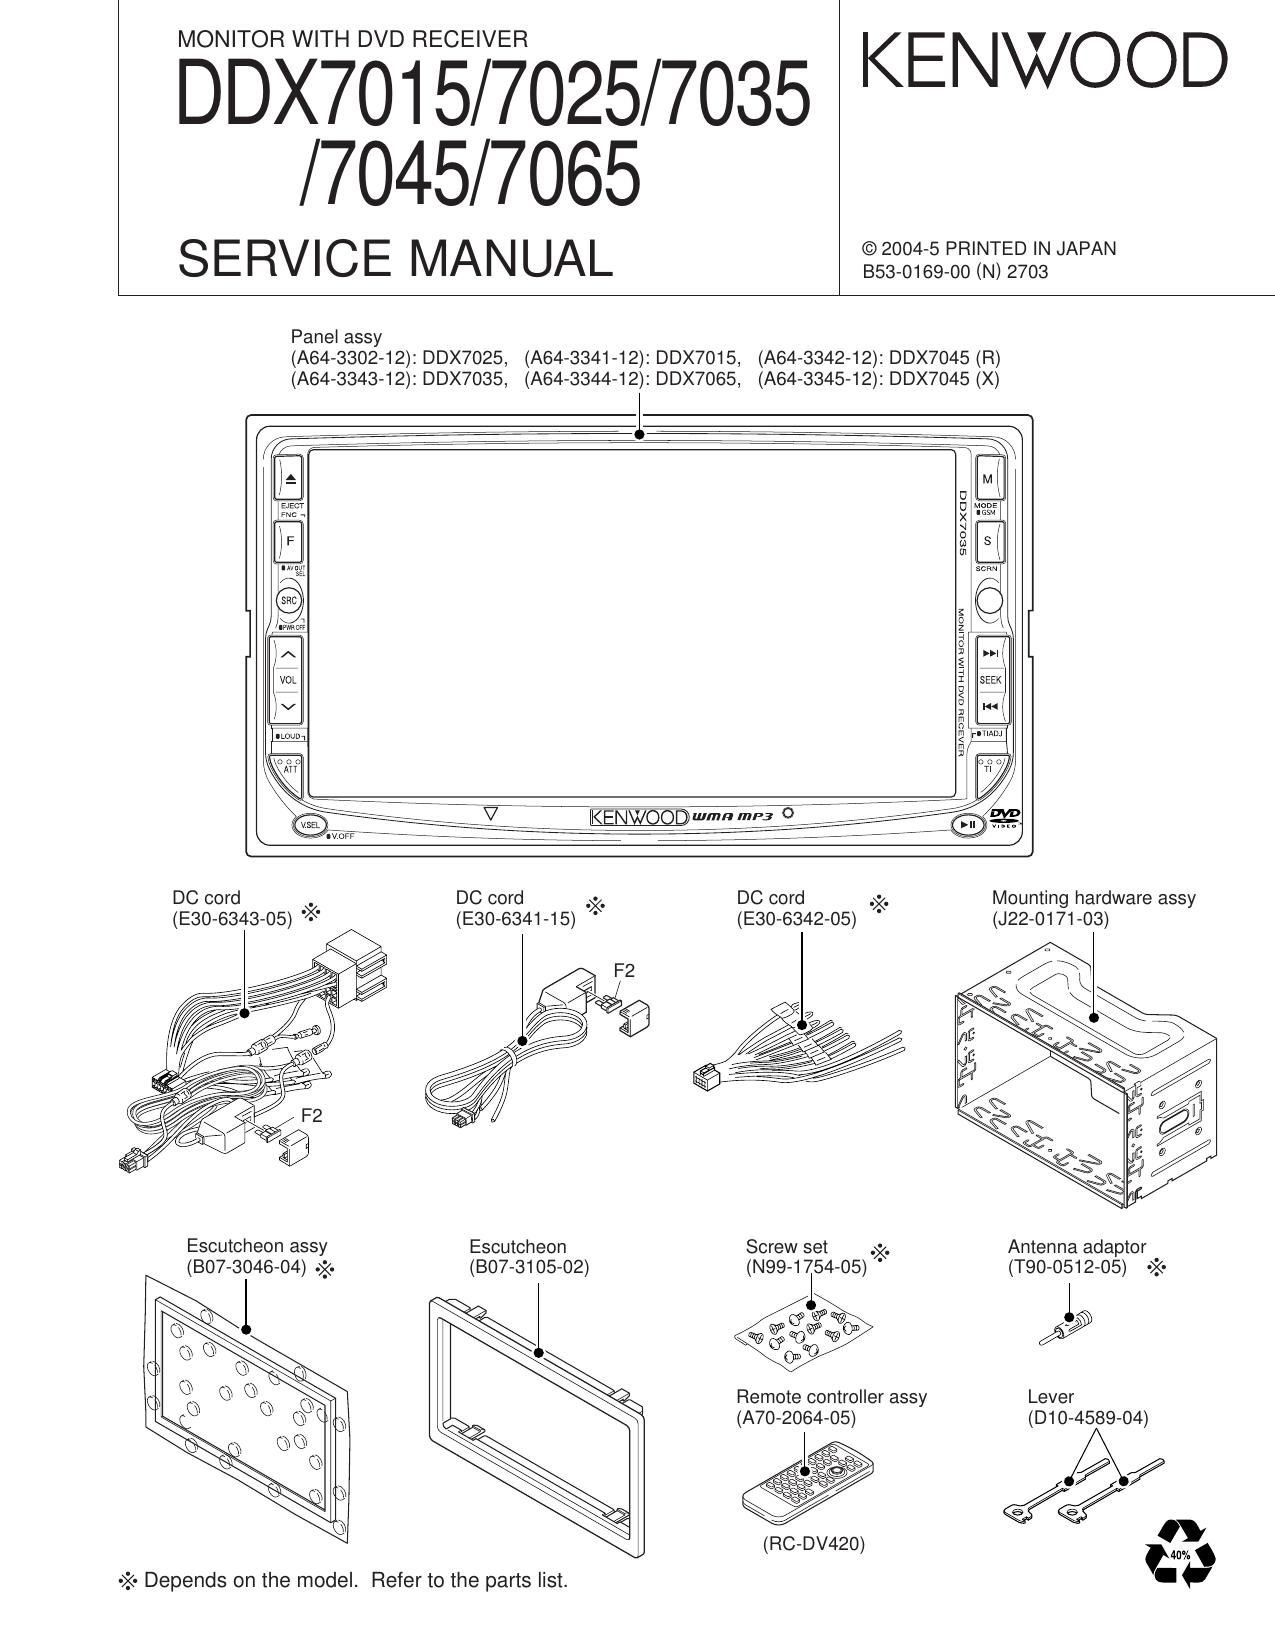 Kenwood DDX 7035 Service Manual